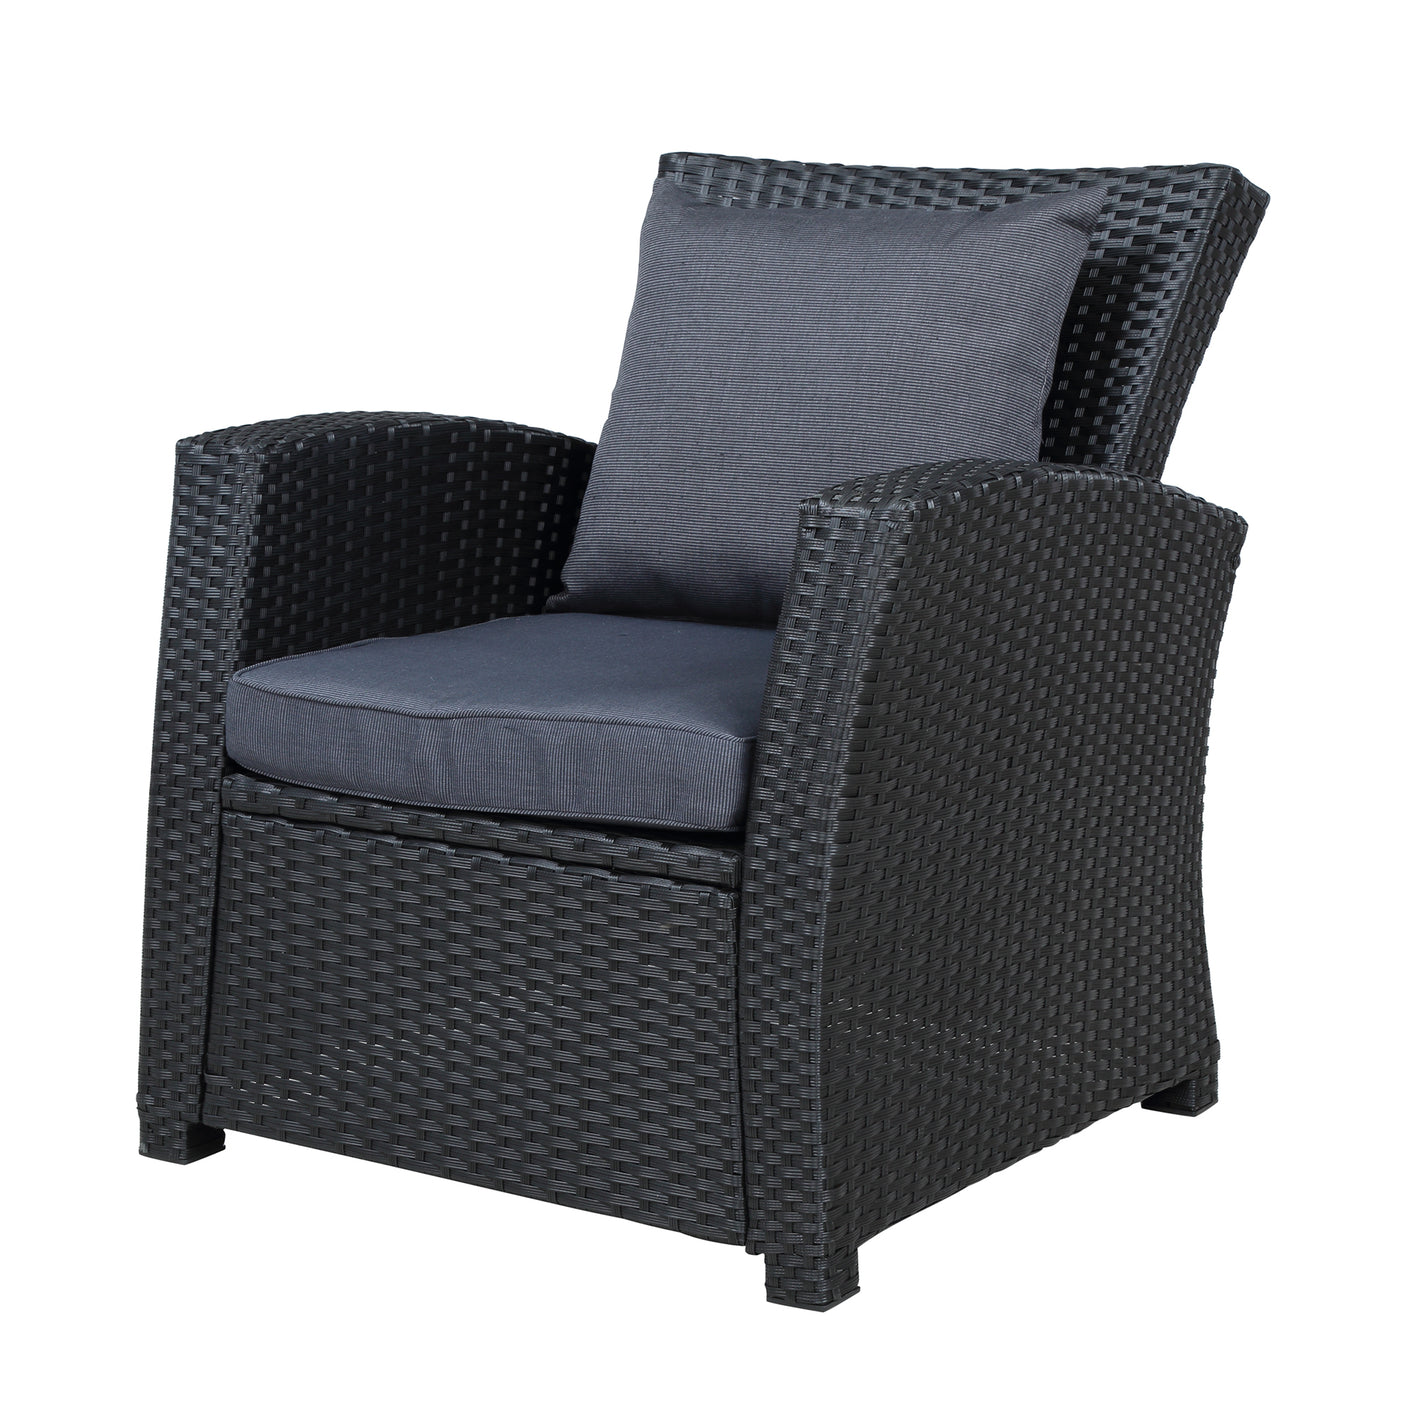 U_STYLE Outdoor Patio Furniture Set 4-Piece Conversation Set Black Wicker Furniture Sofa Set with Dark Grey Cushions